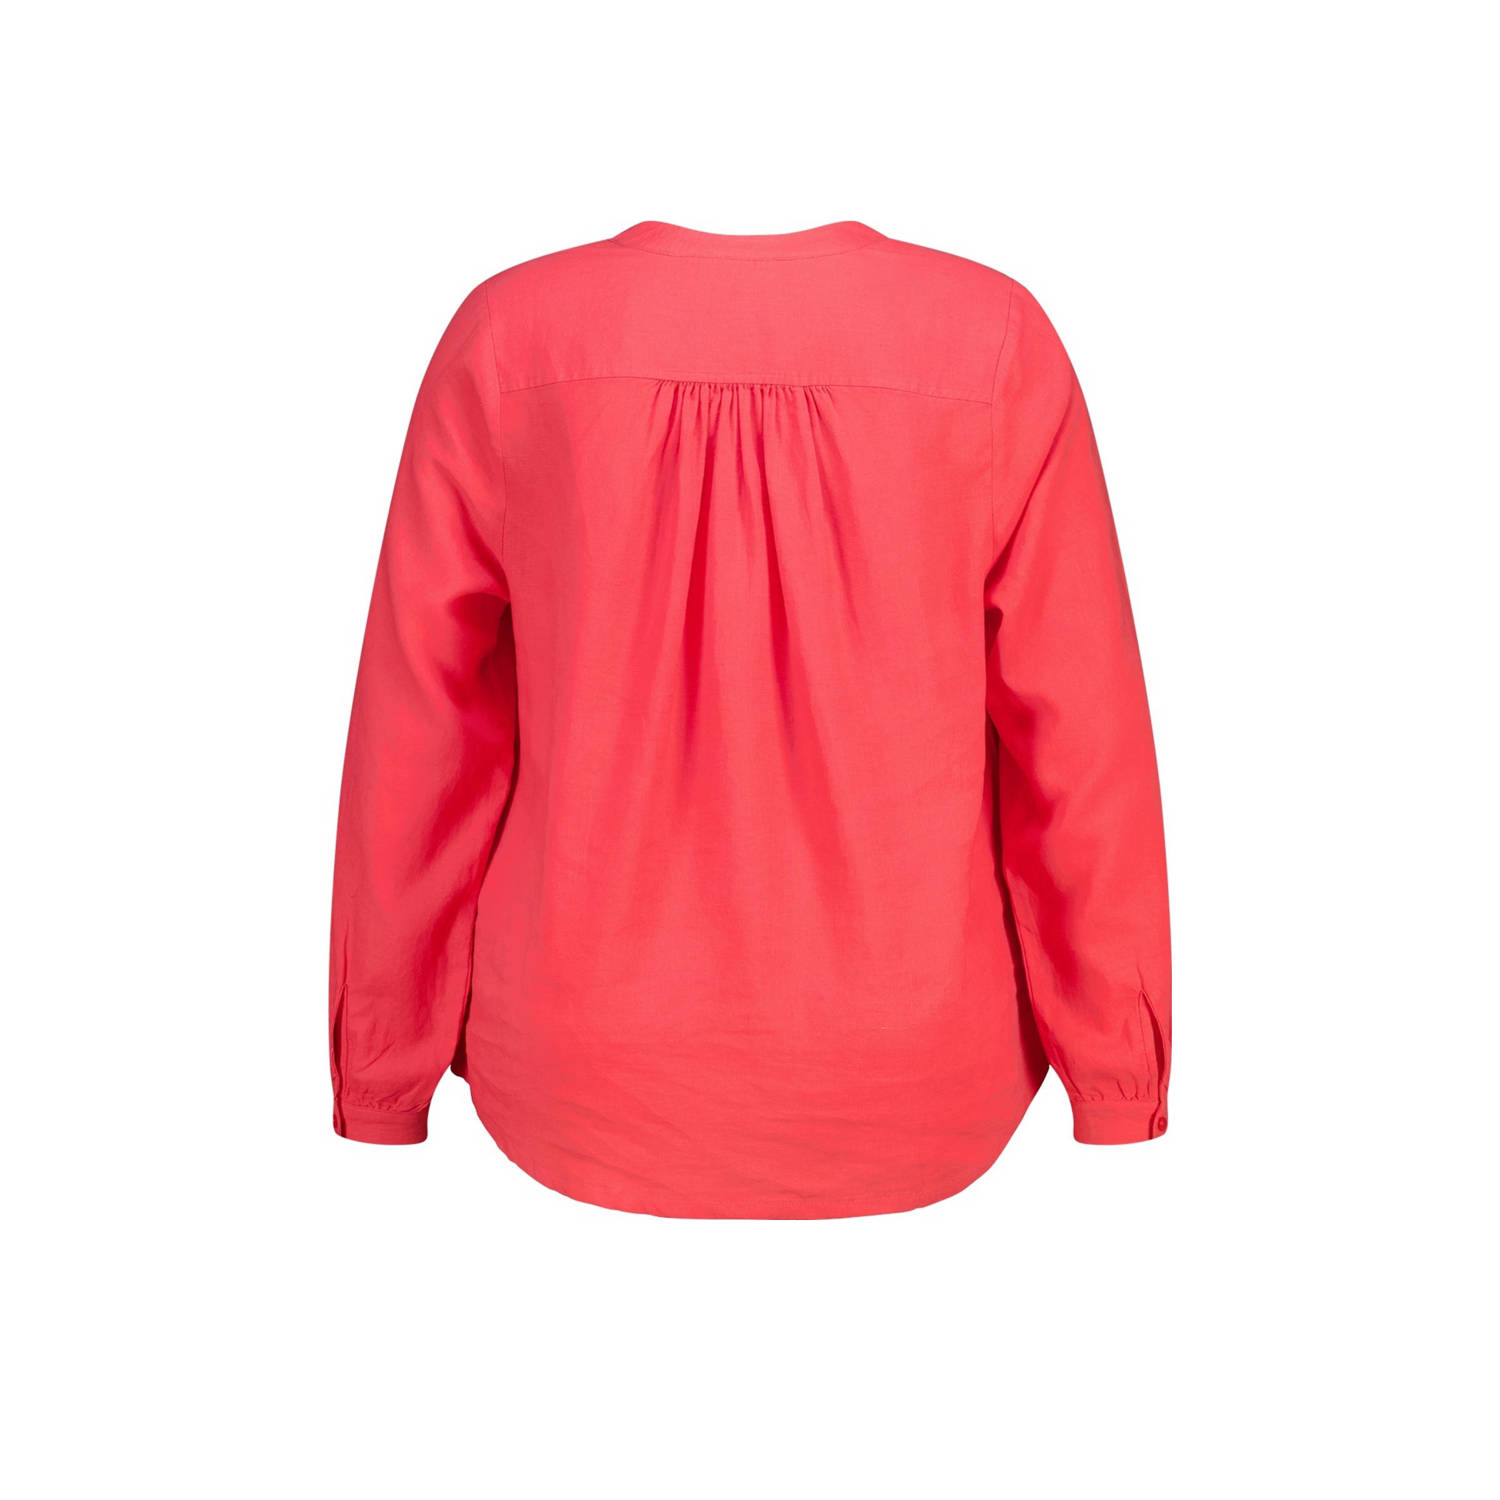 MS Mode blouse koraalrood